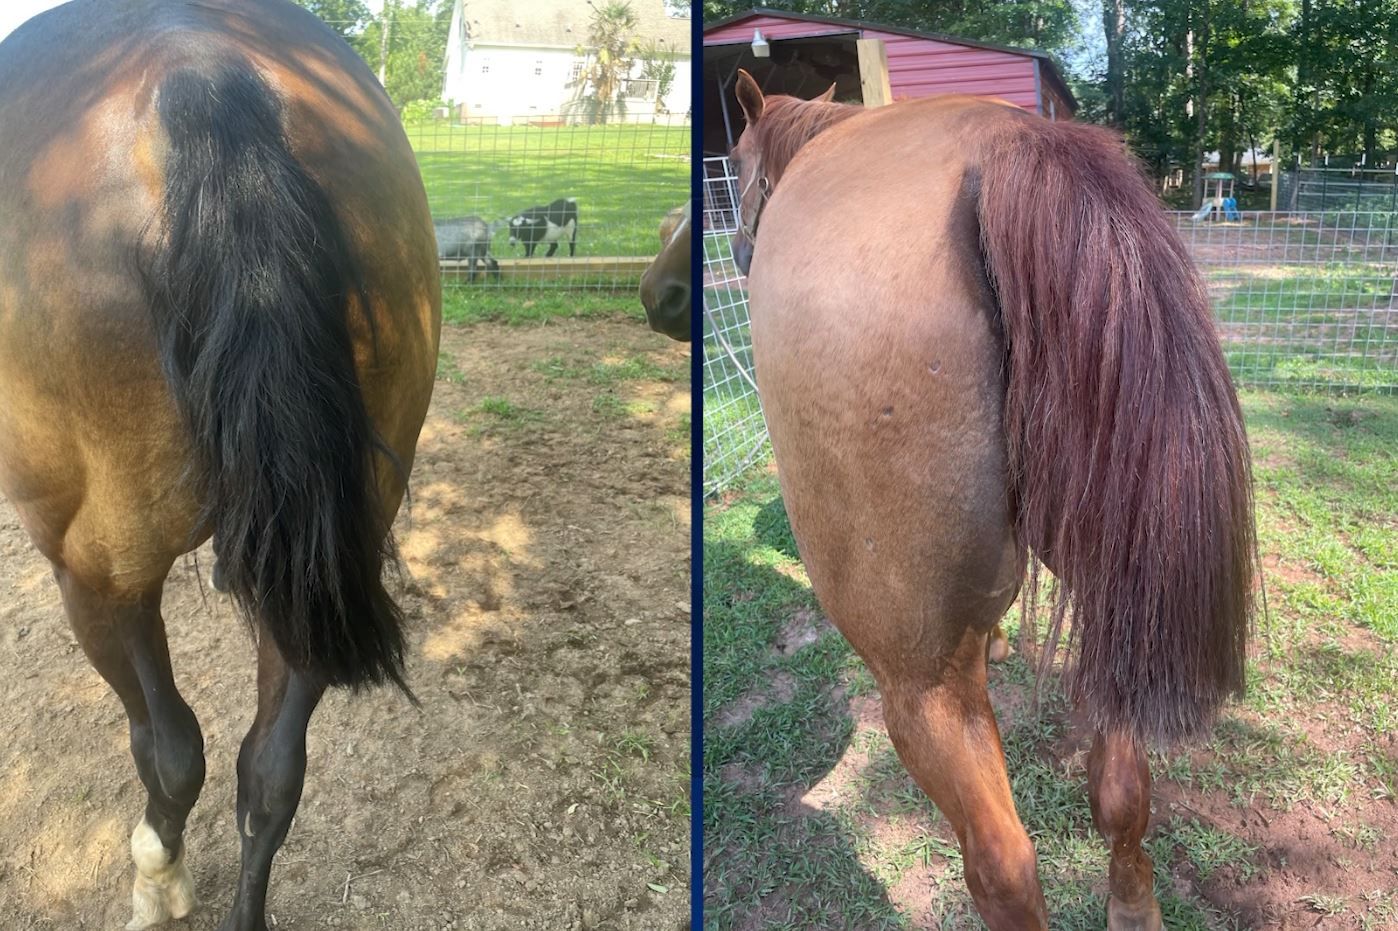 South Carolina: Horse tails cut off